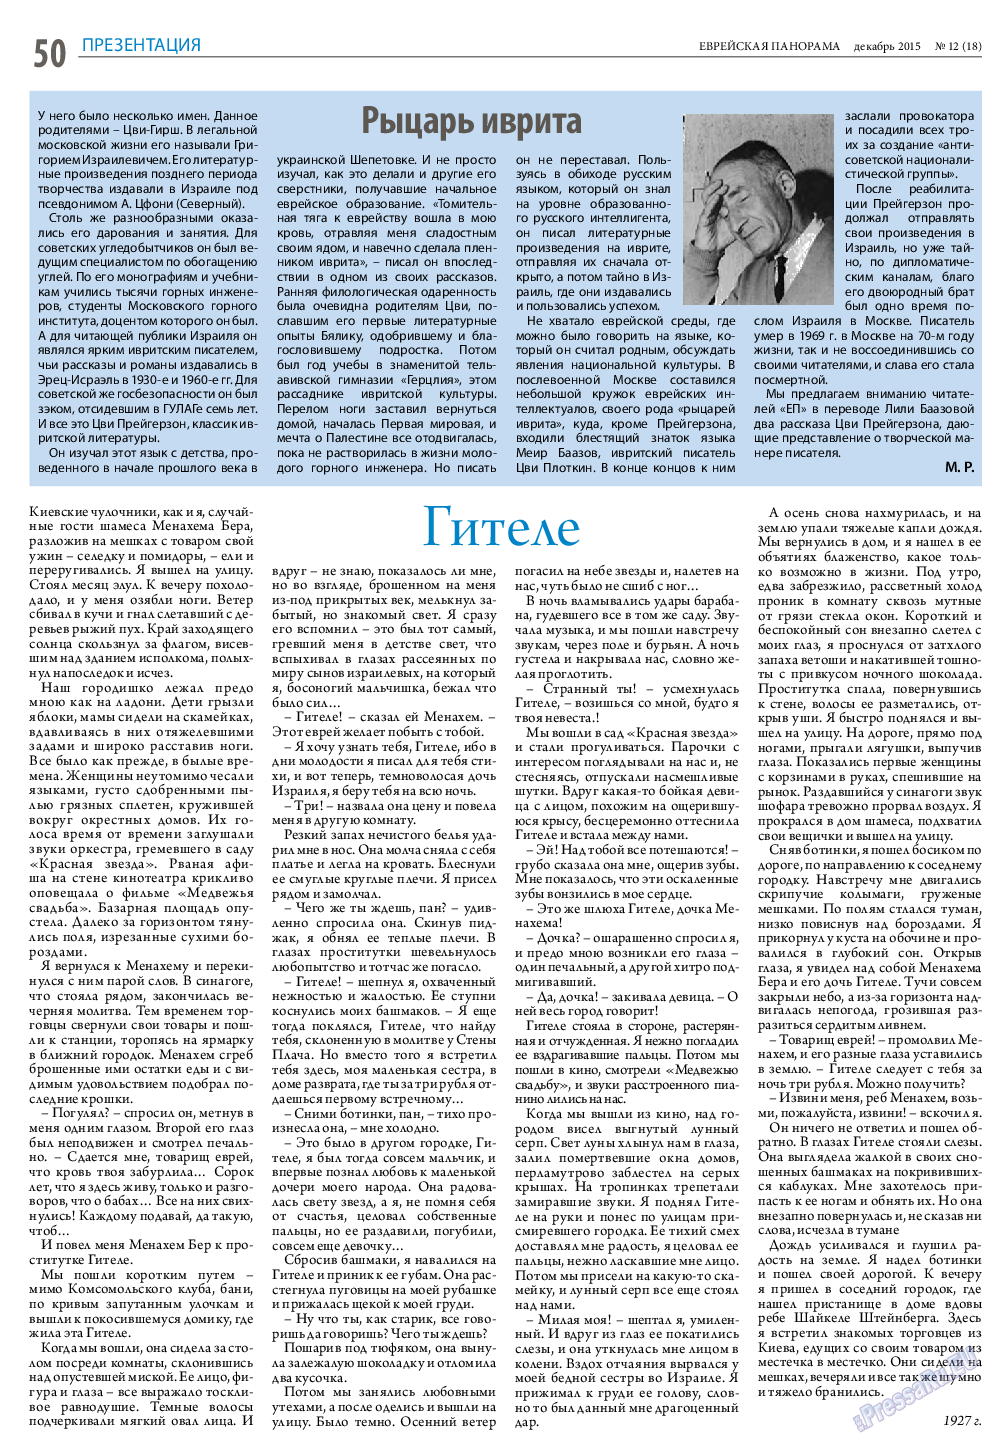 Еврейская панорама, газета. 2015 №12 стр.50